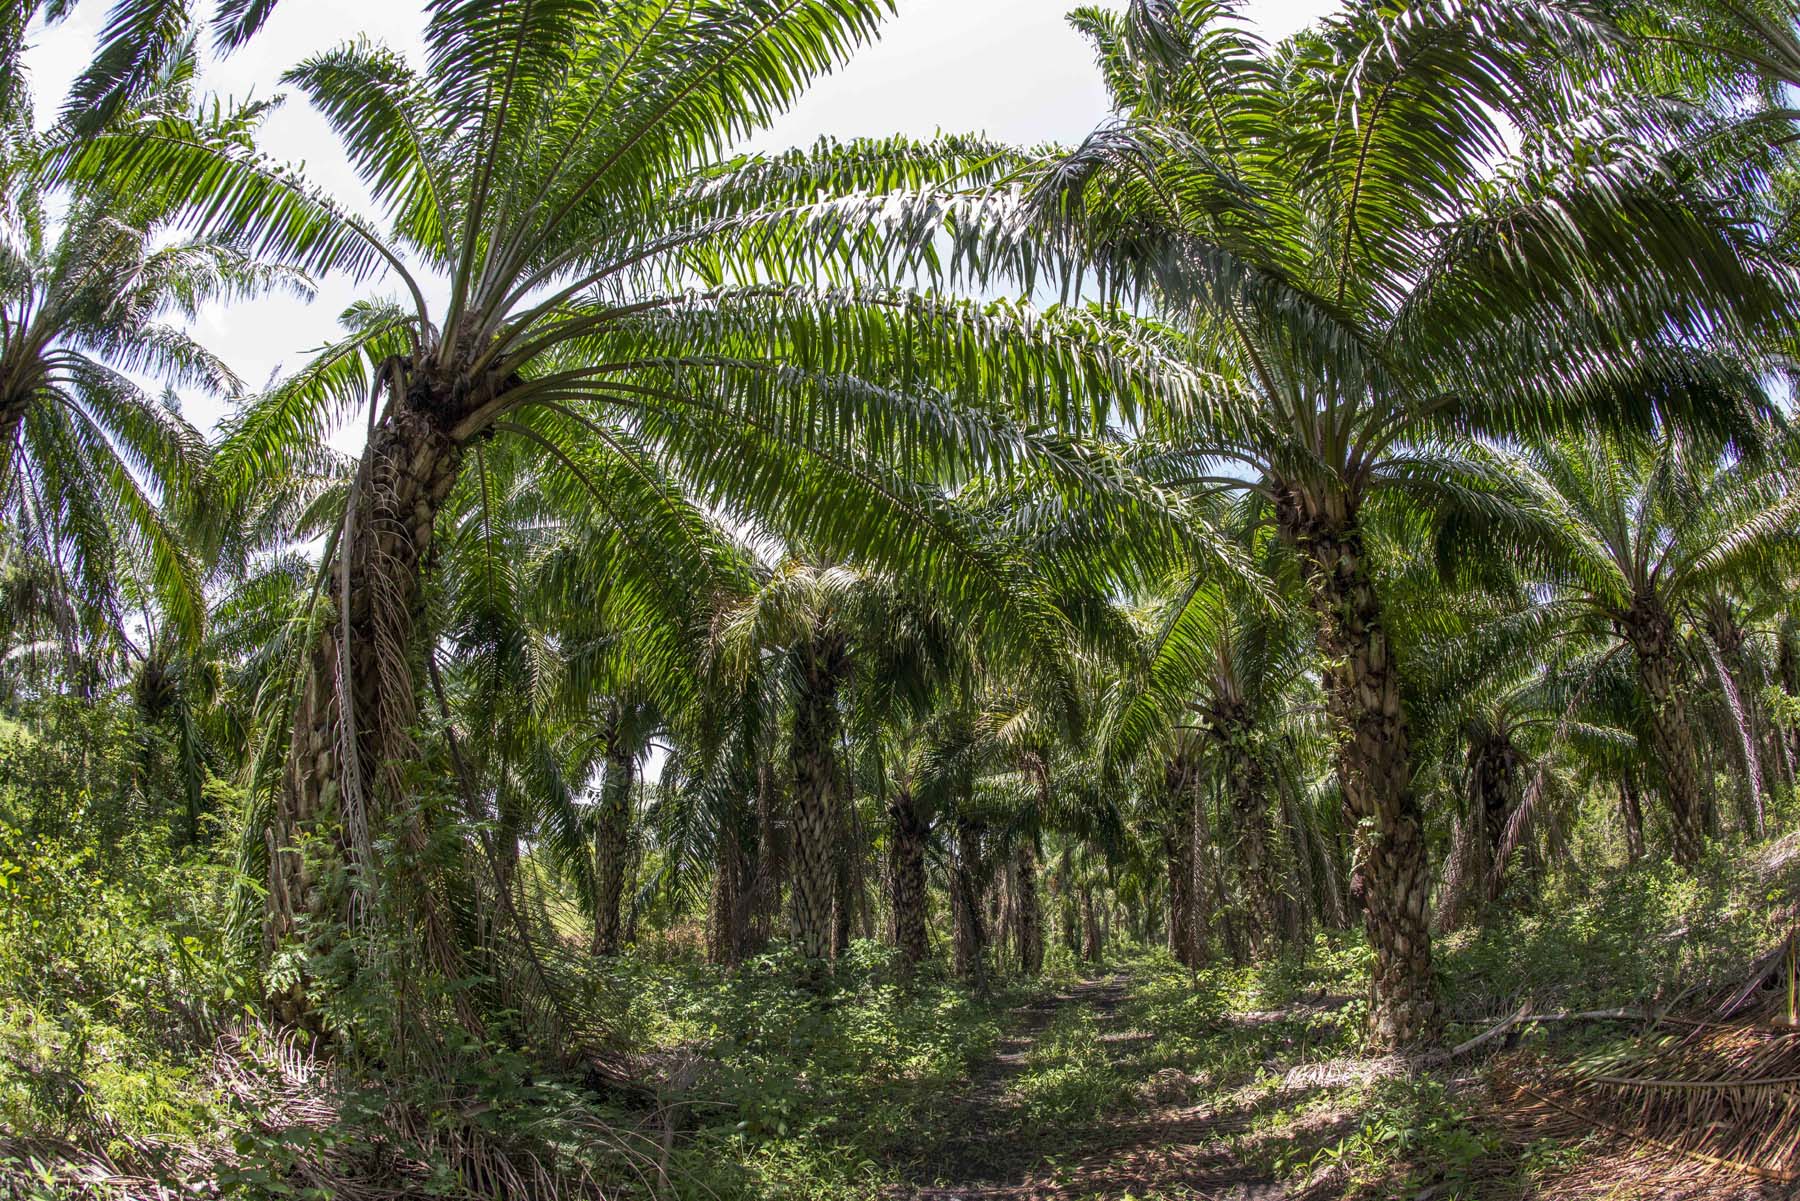 Plantíos de palma aceitera en Campeche. Foto: Víctor Abreu/CCMSS.